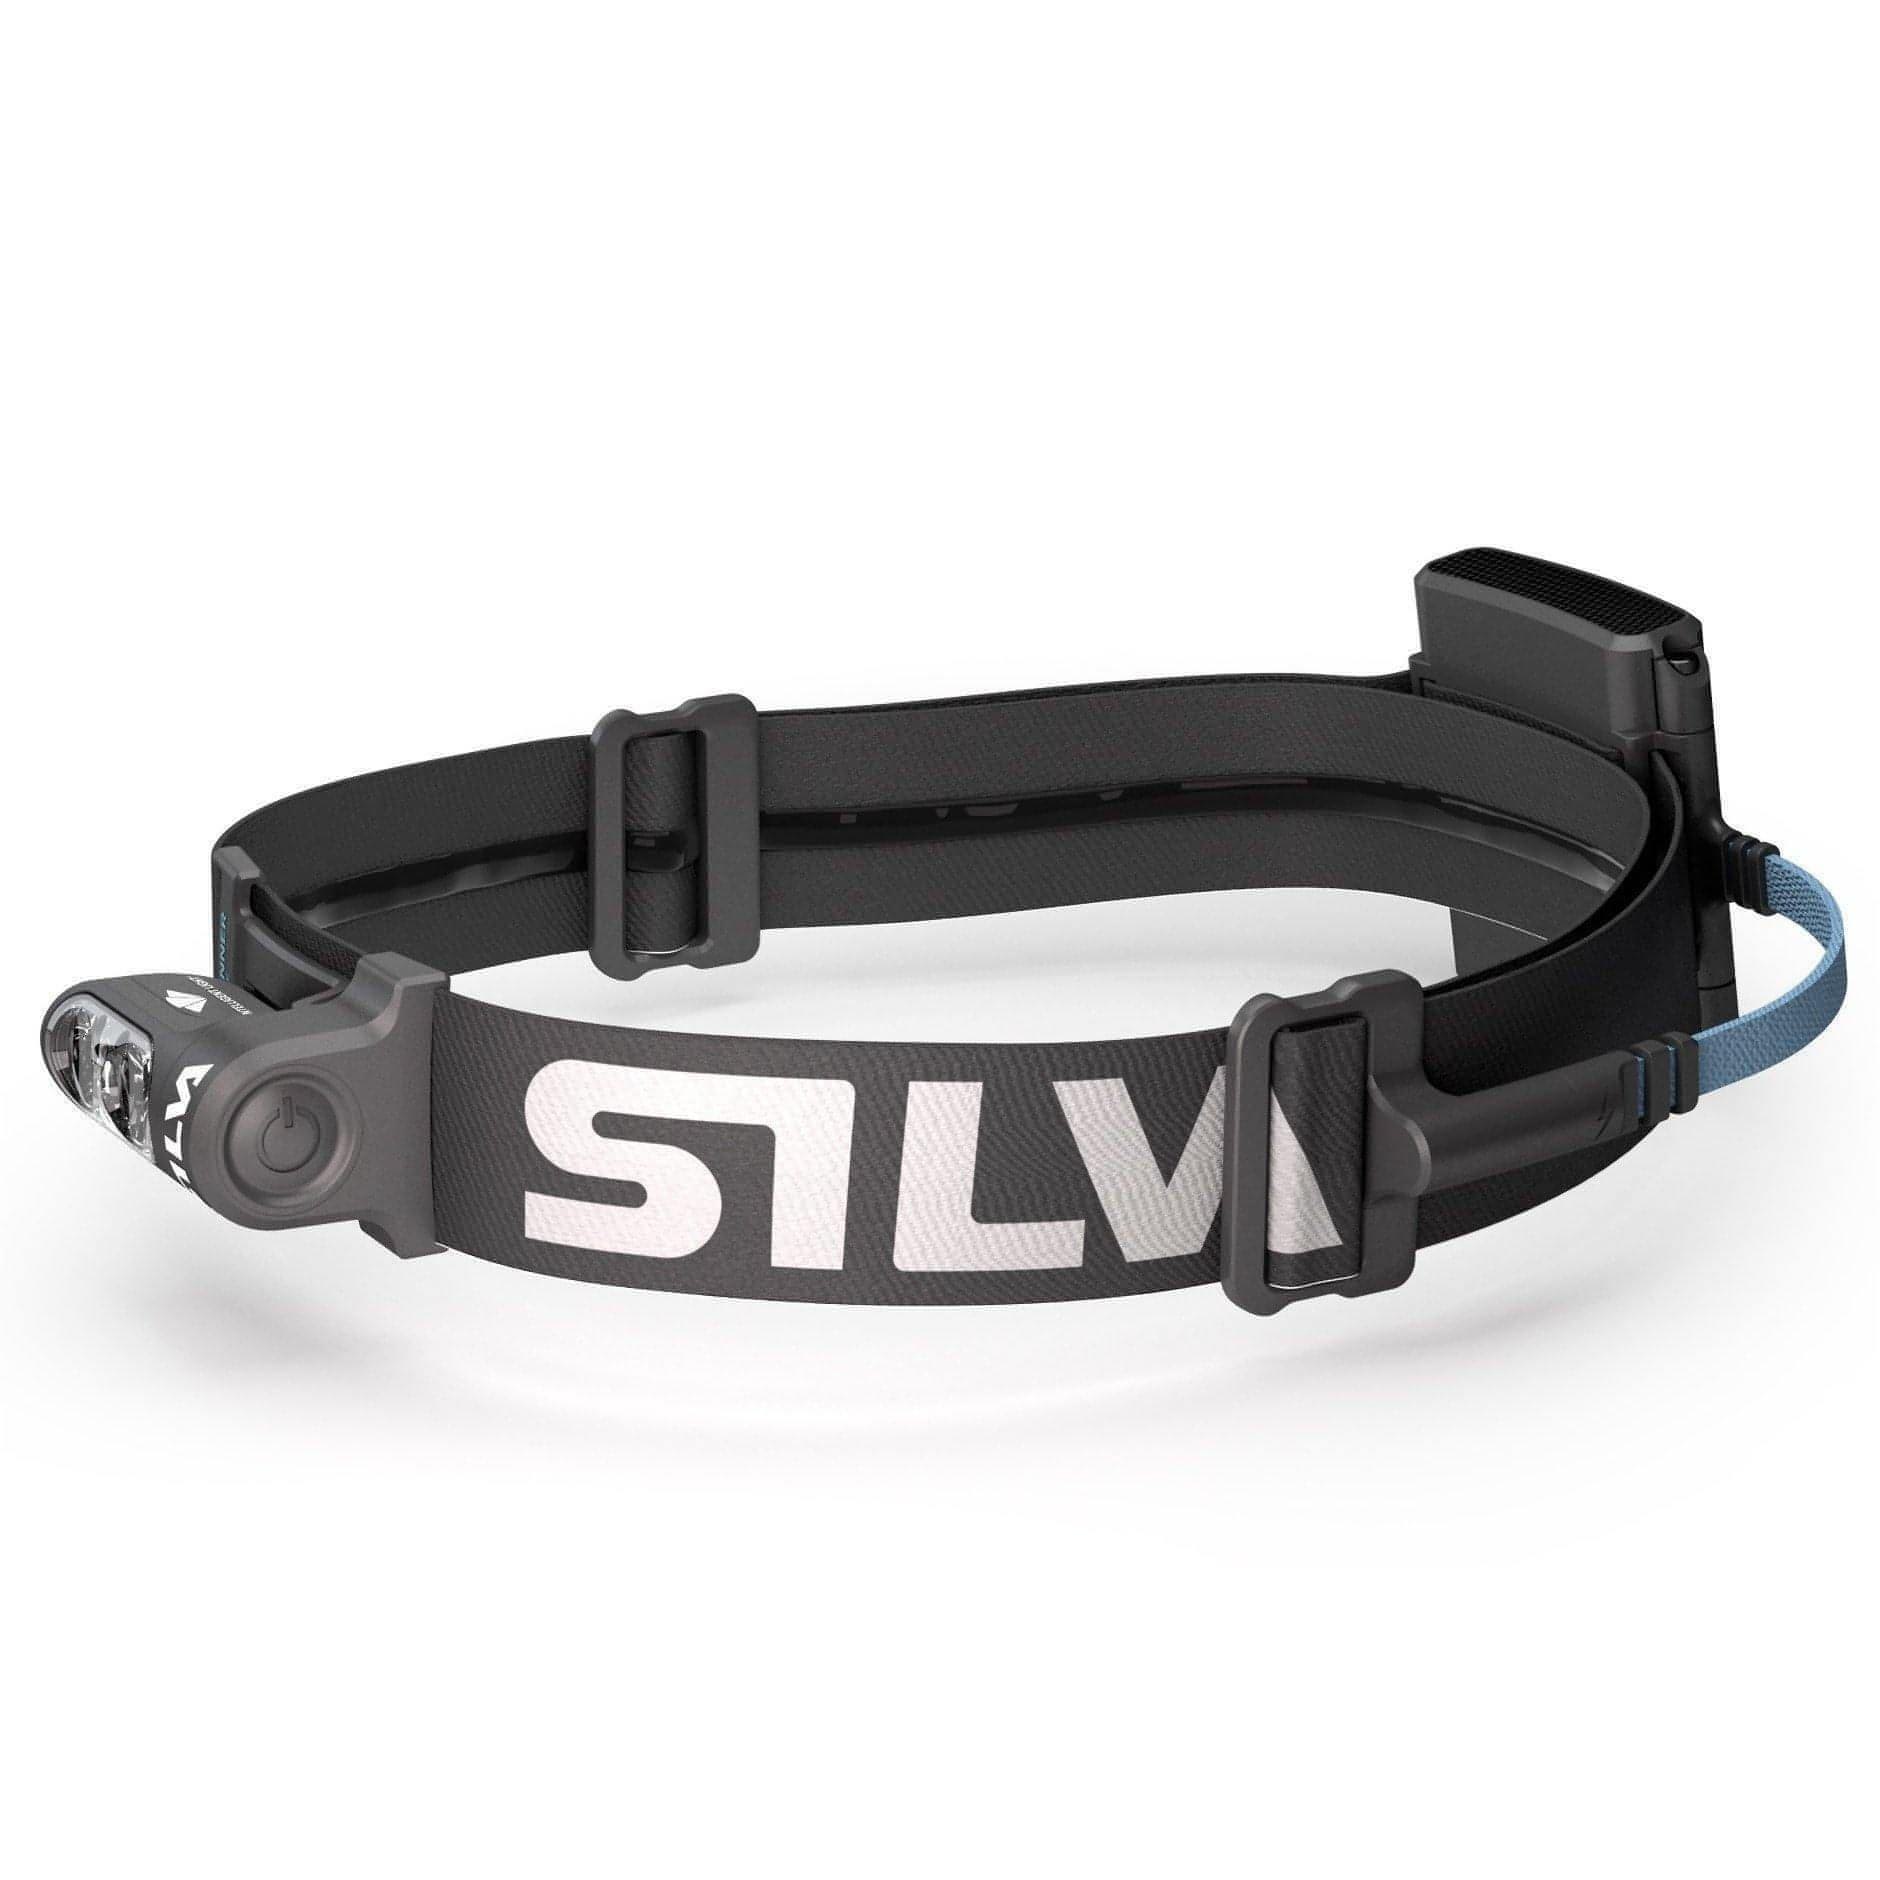 Silva Trail Runner Free Head Torch - Black 7318860200519 - Start Fitness